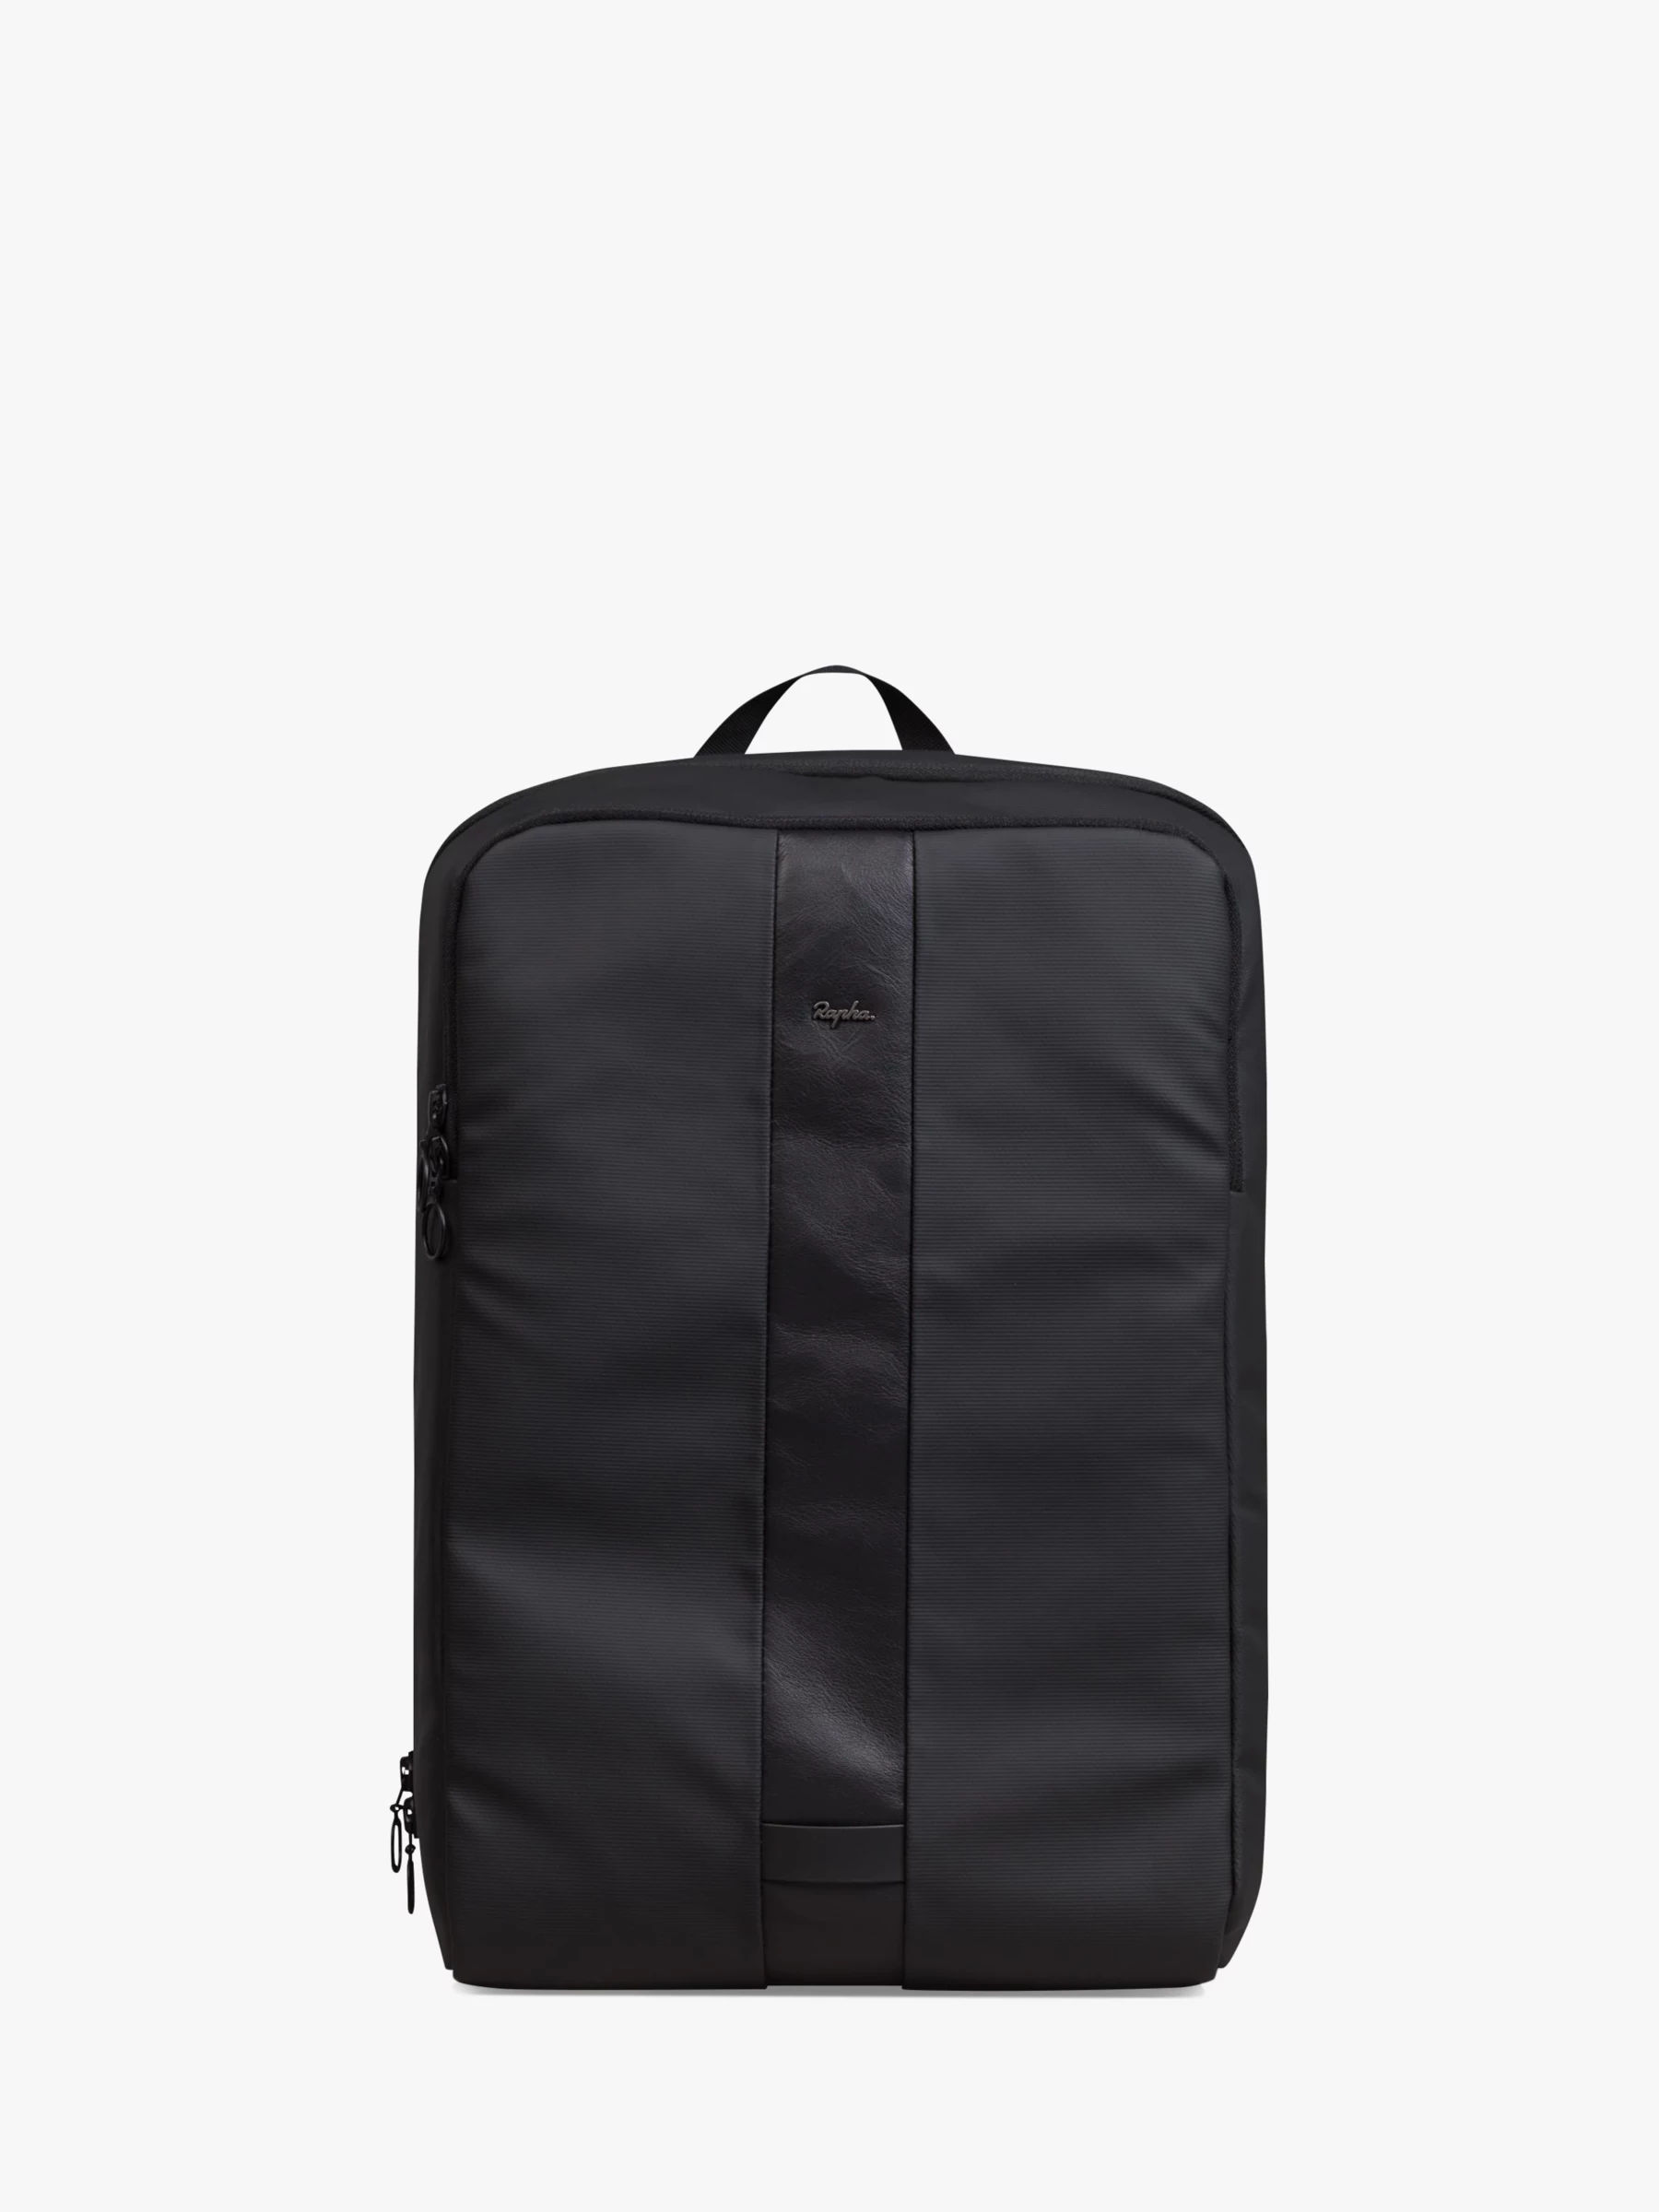 Rapha Small Travel Backpack | £105.00 | Buchanan Galleries